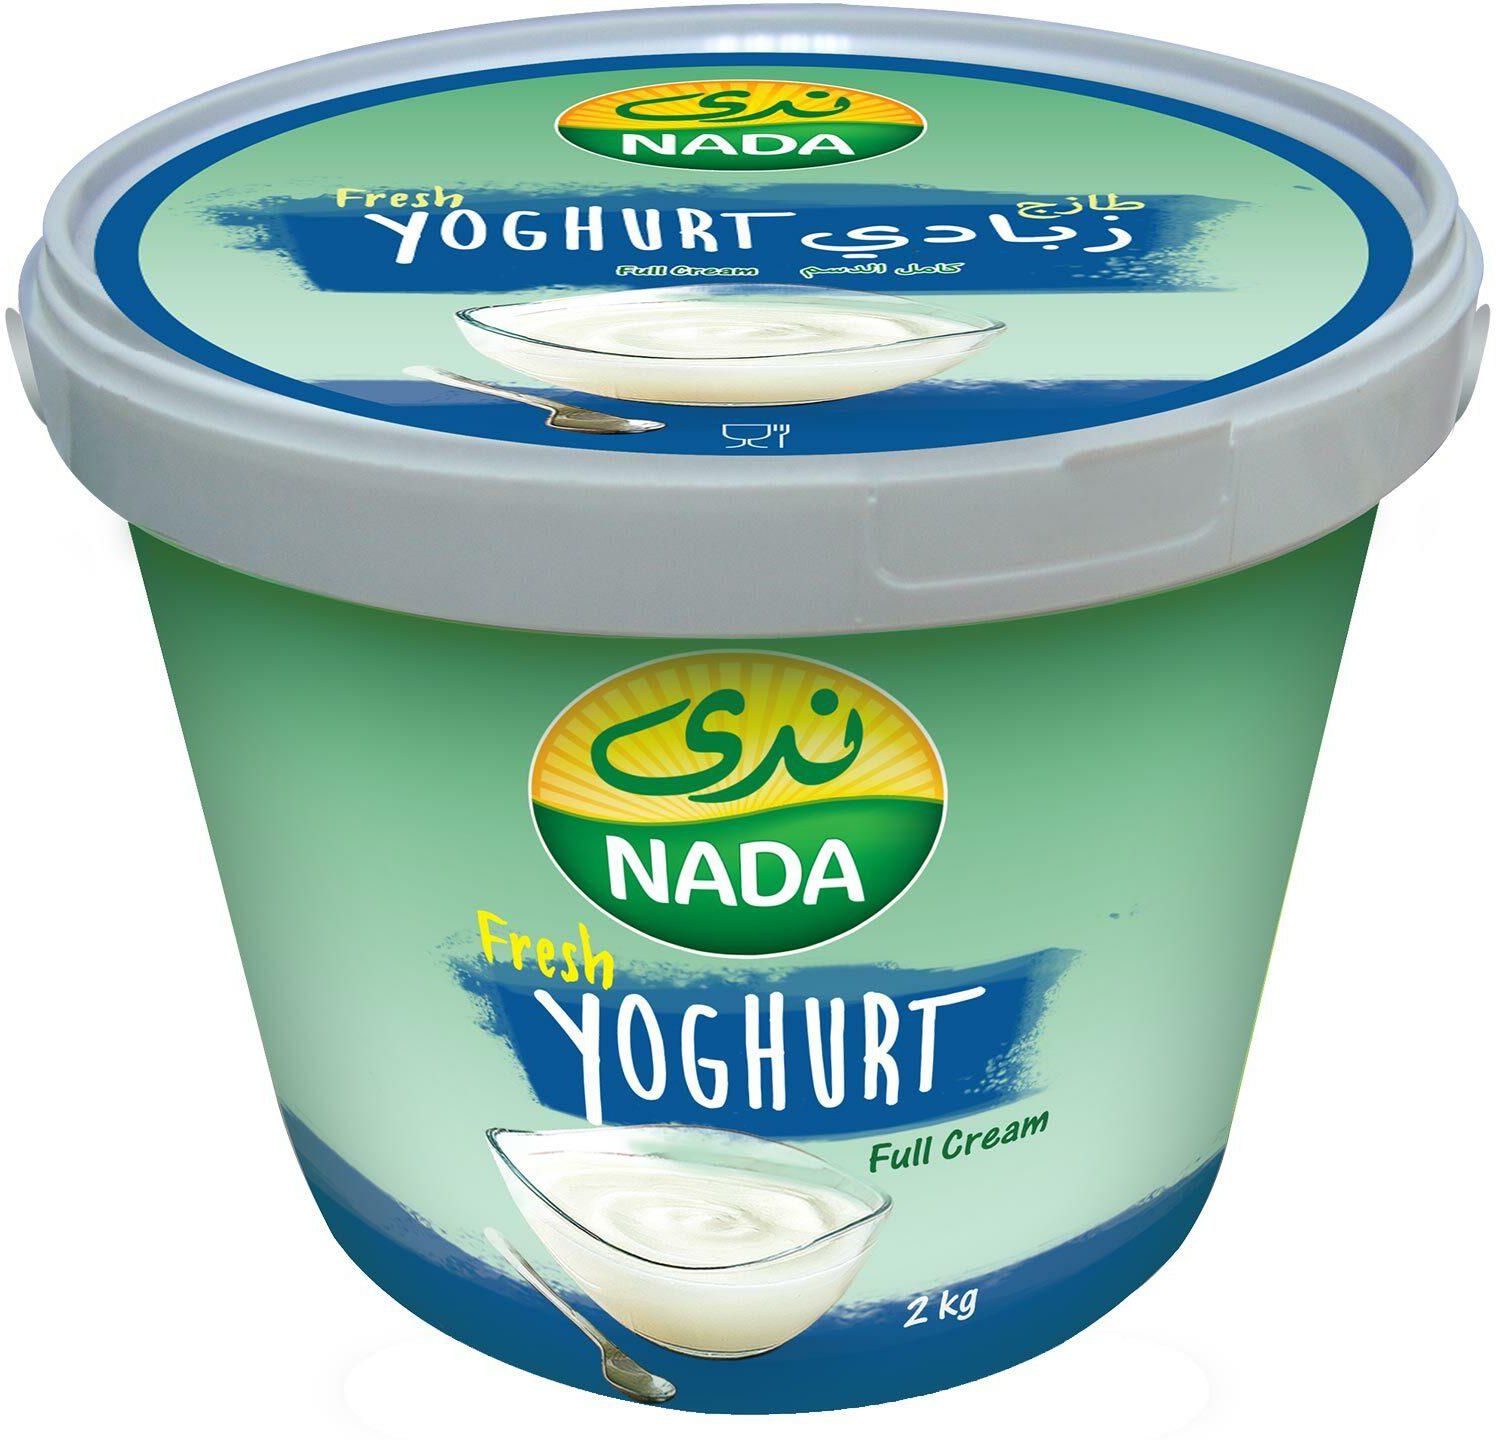 Nada fresh yoghurt full cream 2 kg